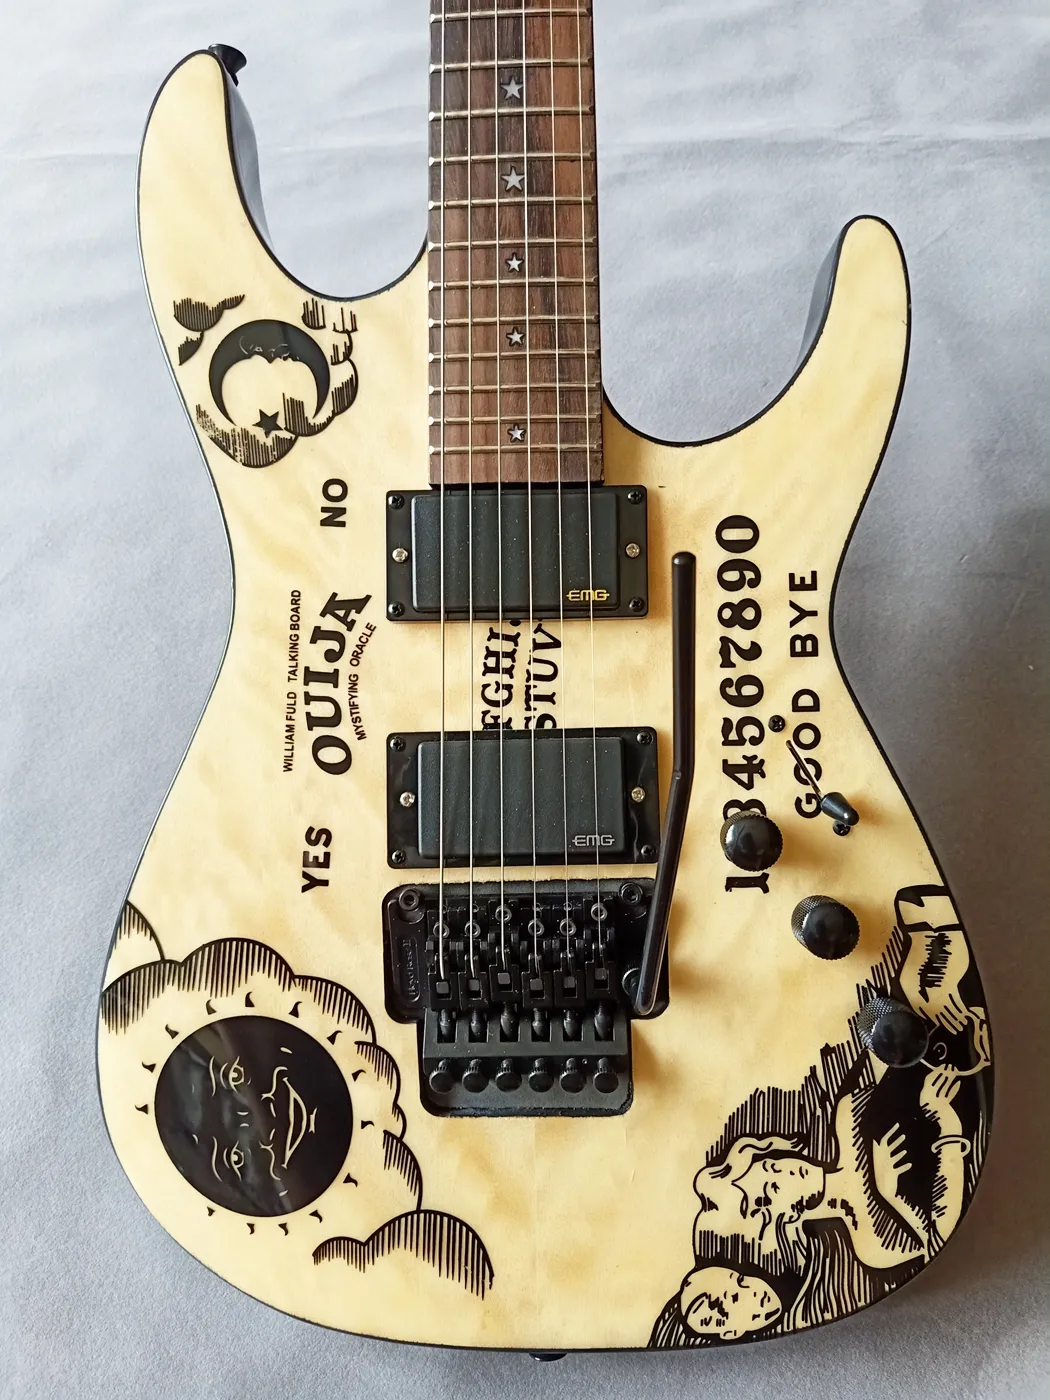 Custom Made Reveals Kirk Hammett Signature KH Ouija Natural Guitar Active Pickups And Tremolo Guitar Bridge Black Hardware Free Shopping